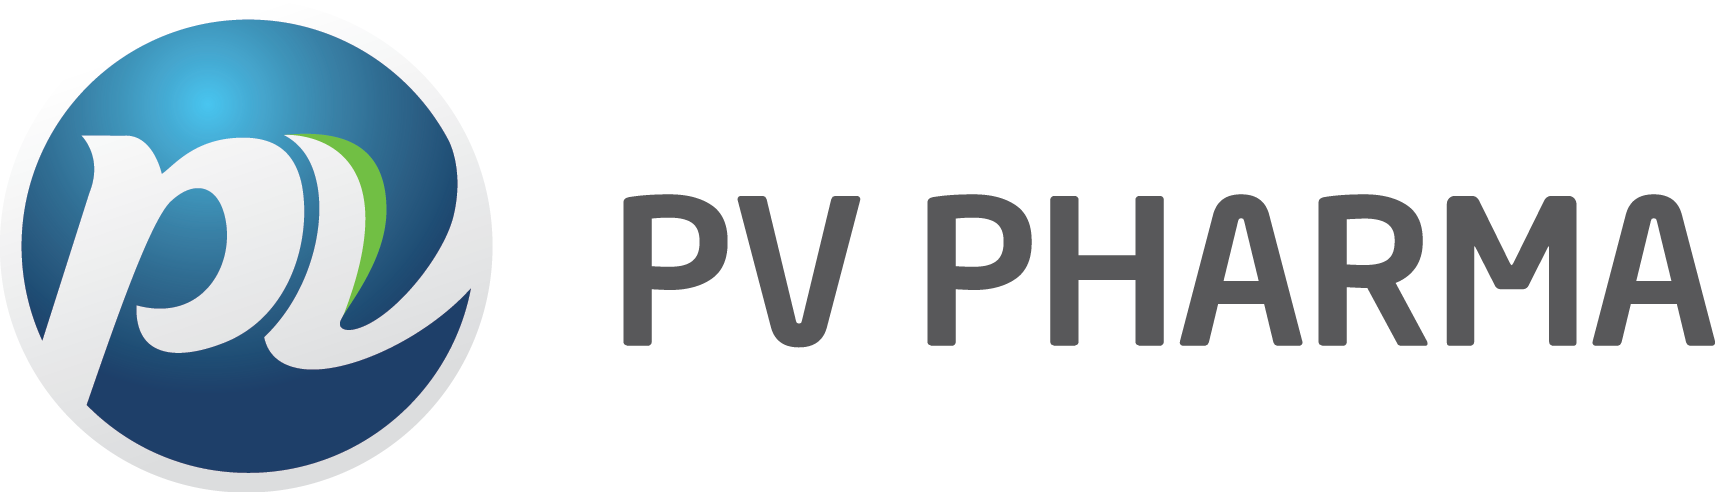 PhucVinh_Logo-01.png